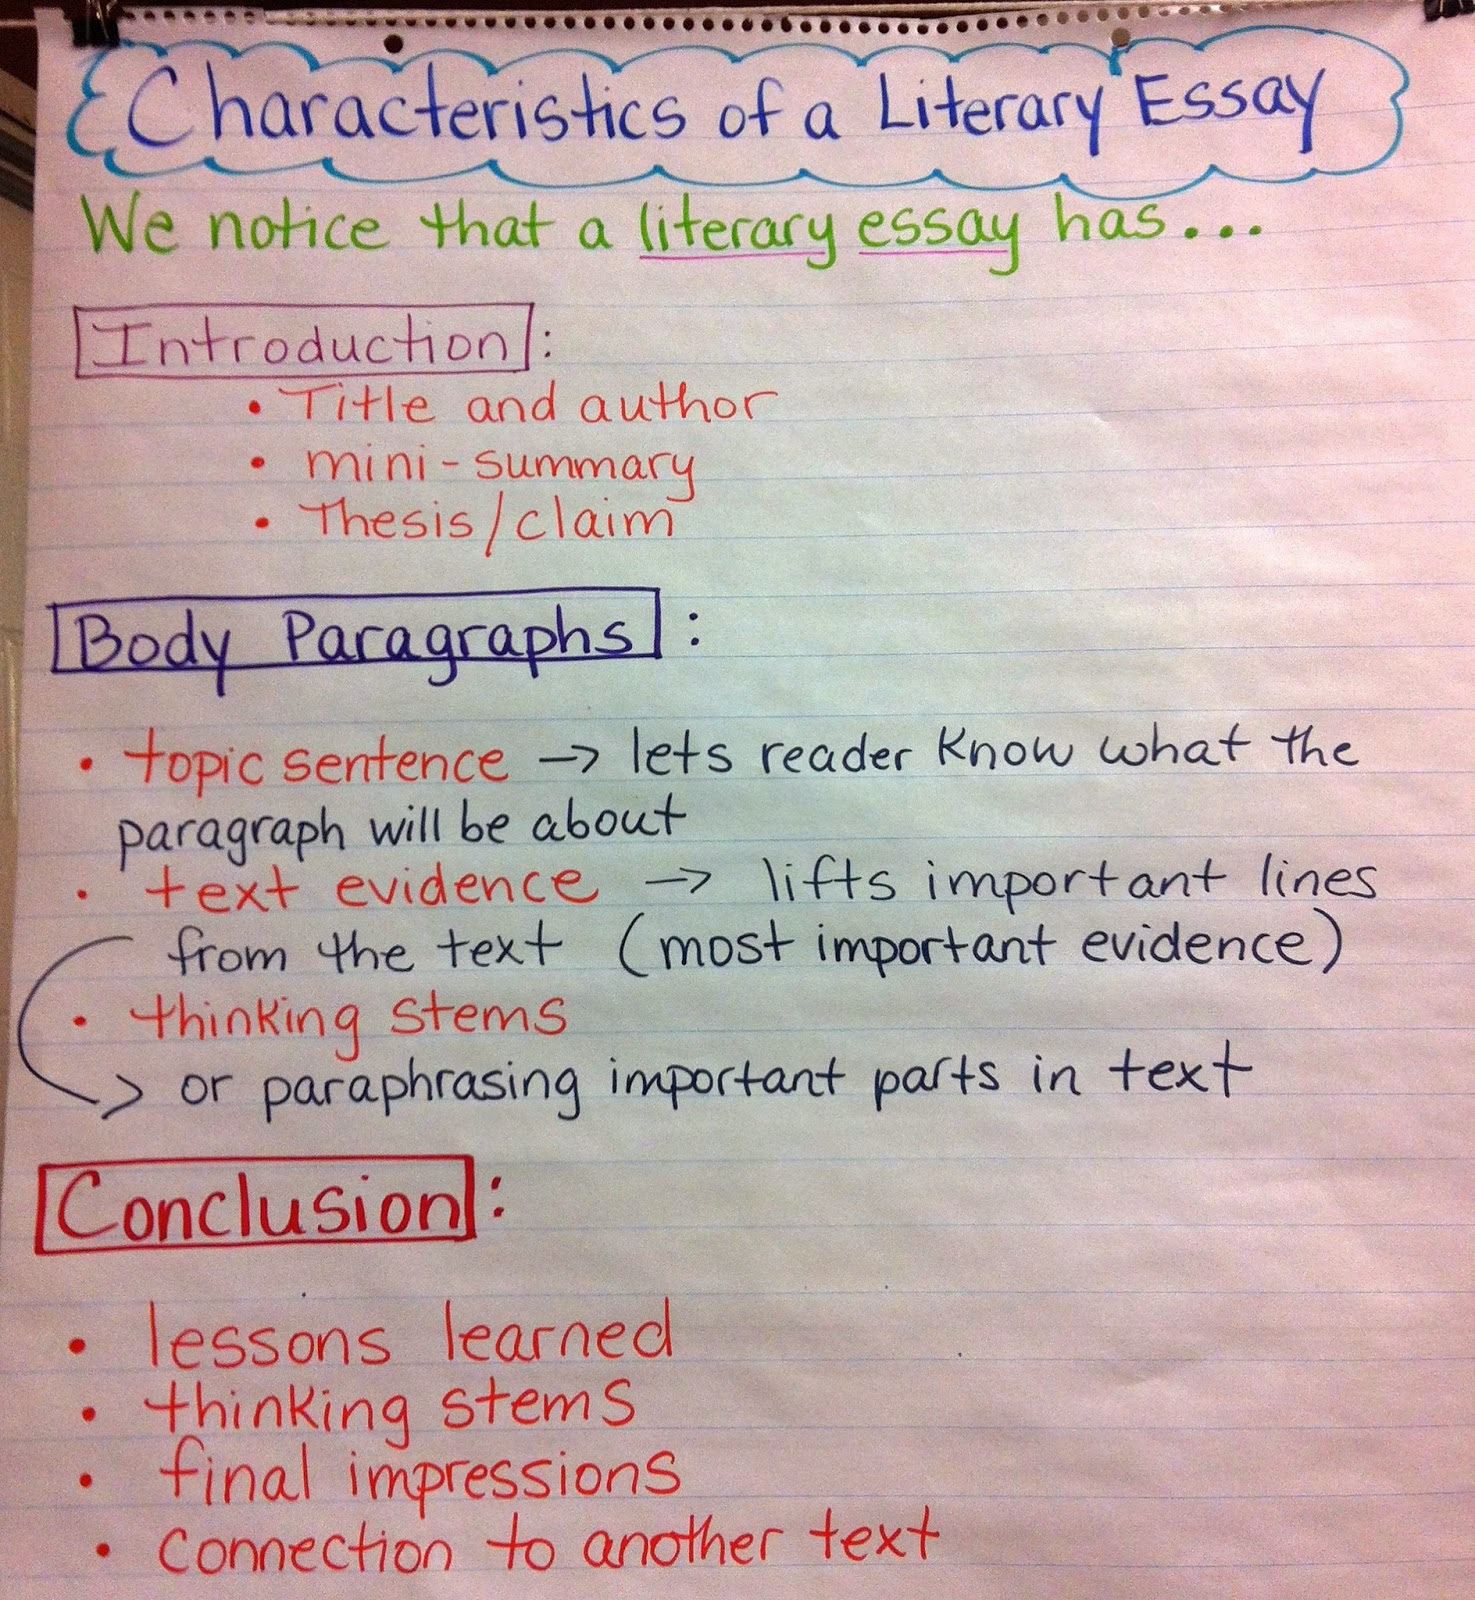 Give the characteristics of argumentative essay